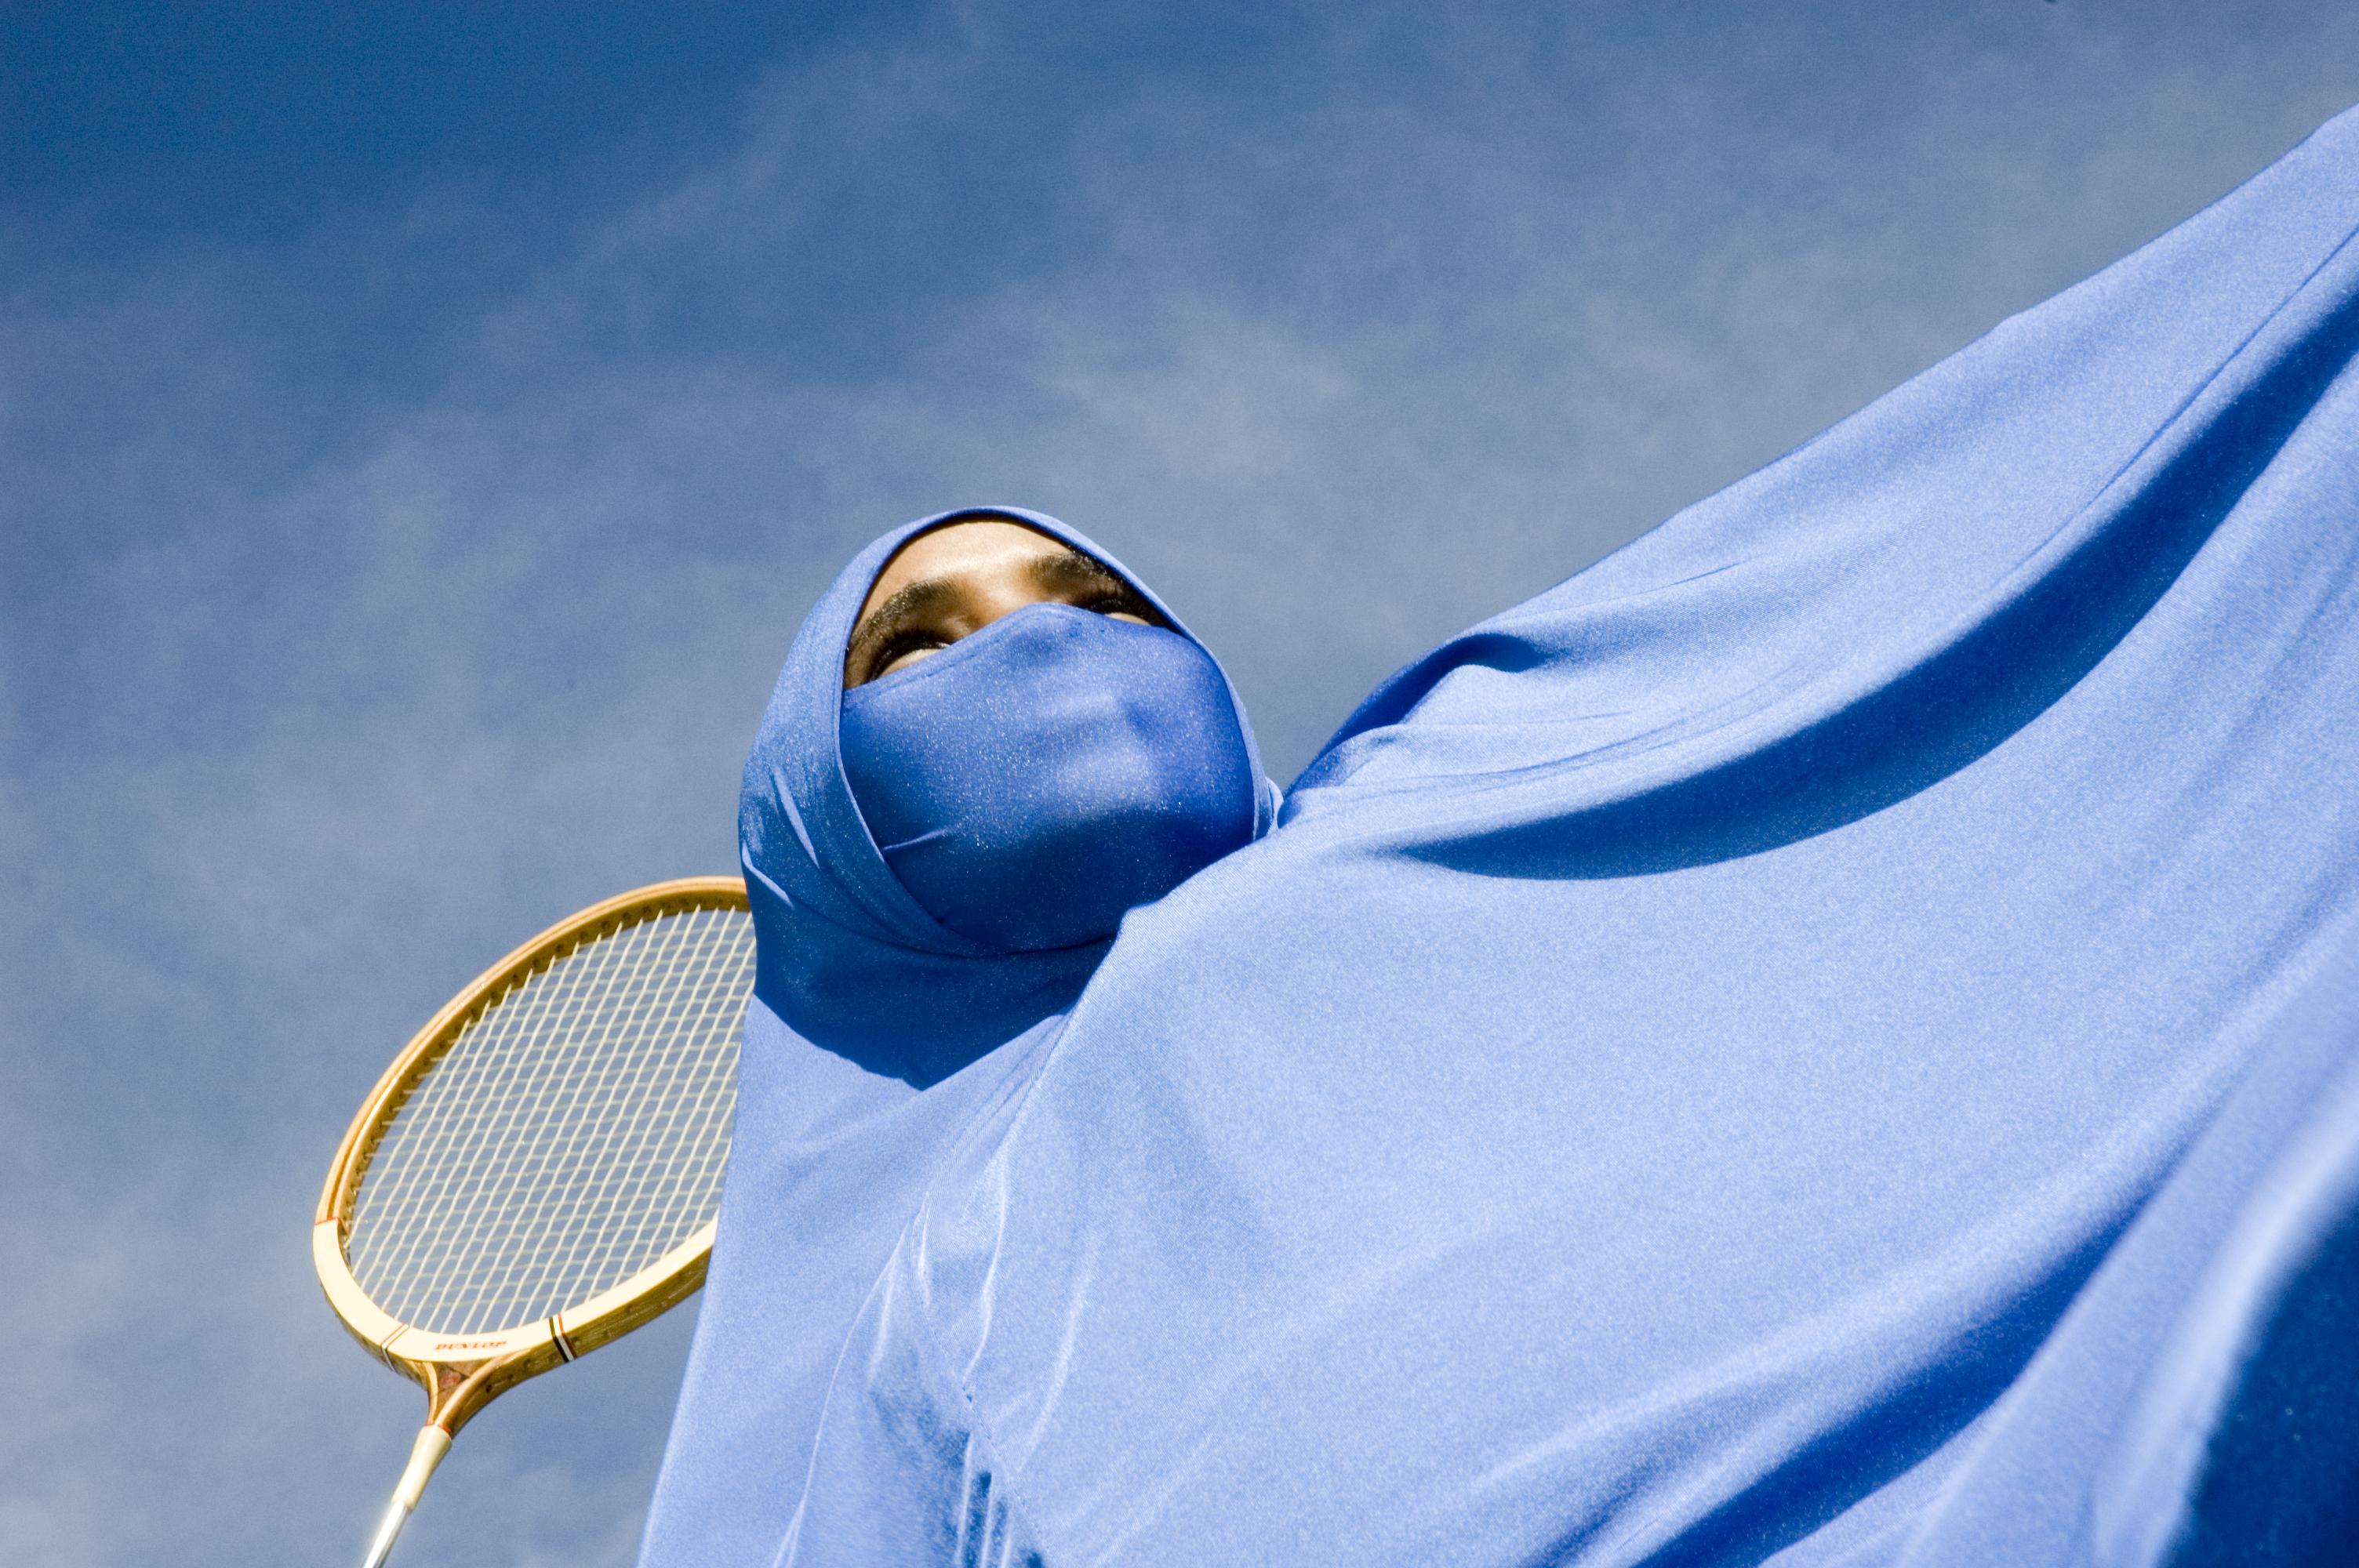 Tennis racquet on a blue background.